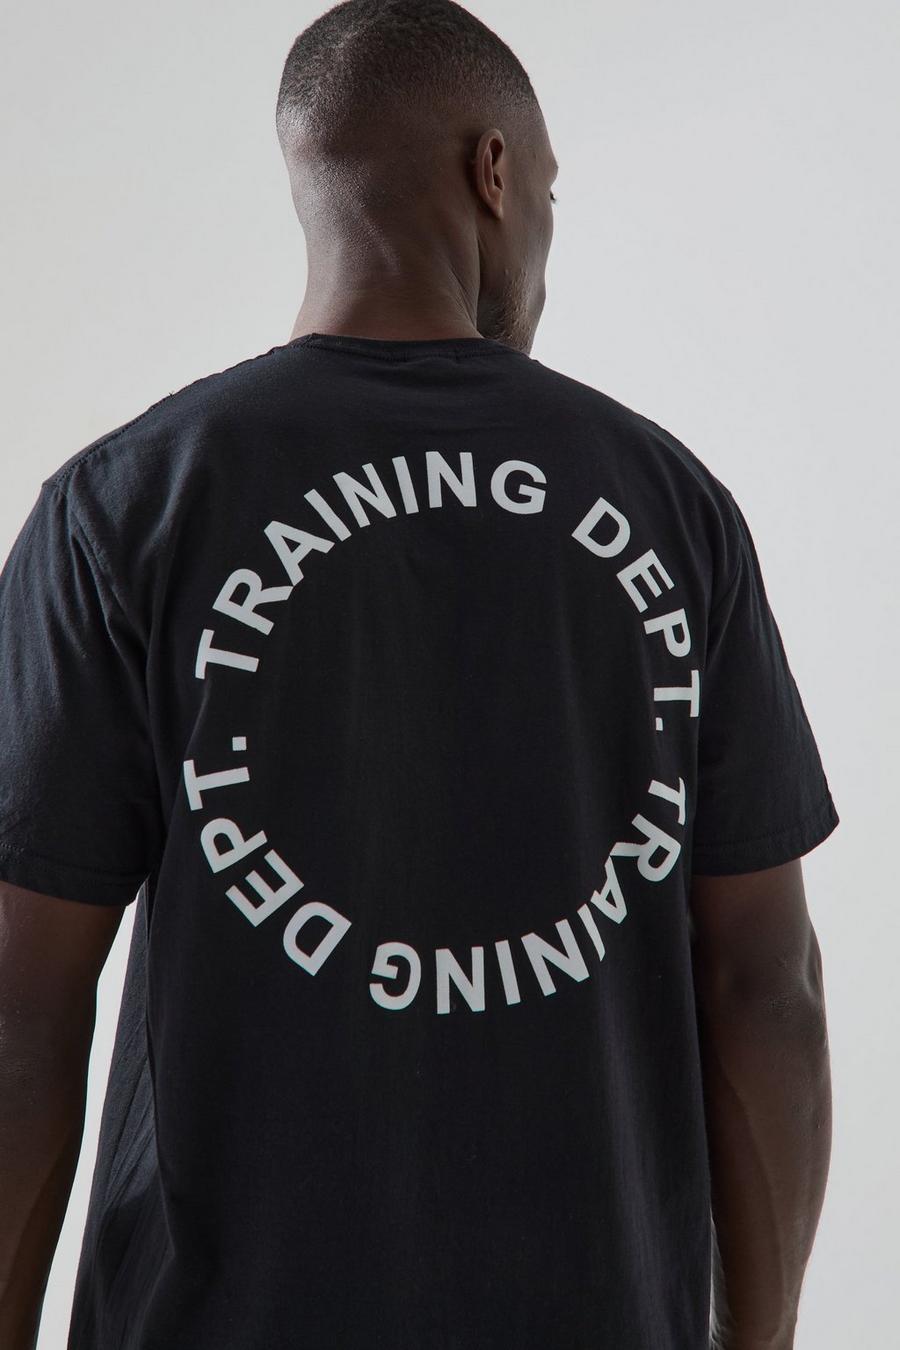 Camiseta oversize con estampado Active Training Dept, Black